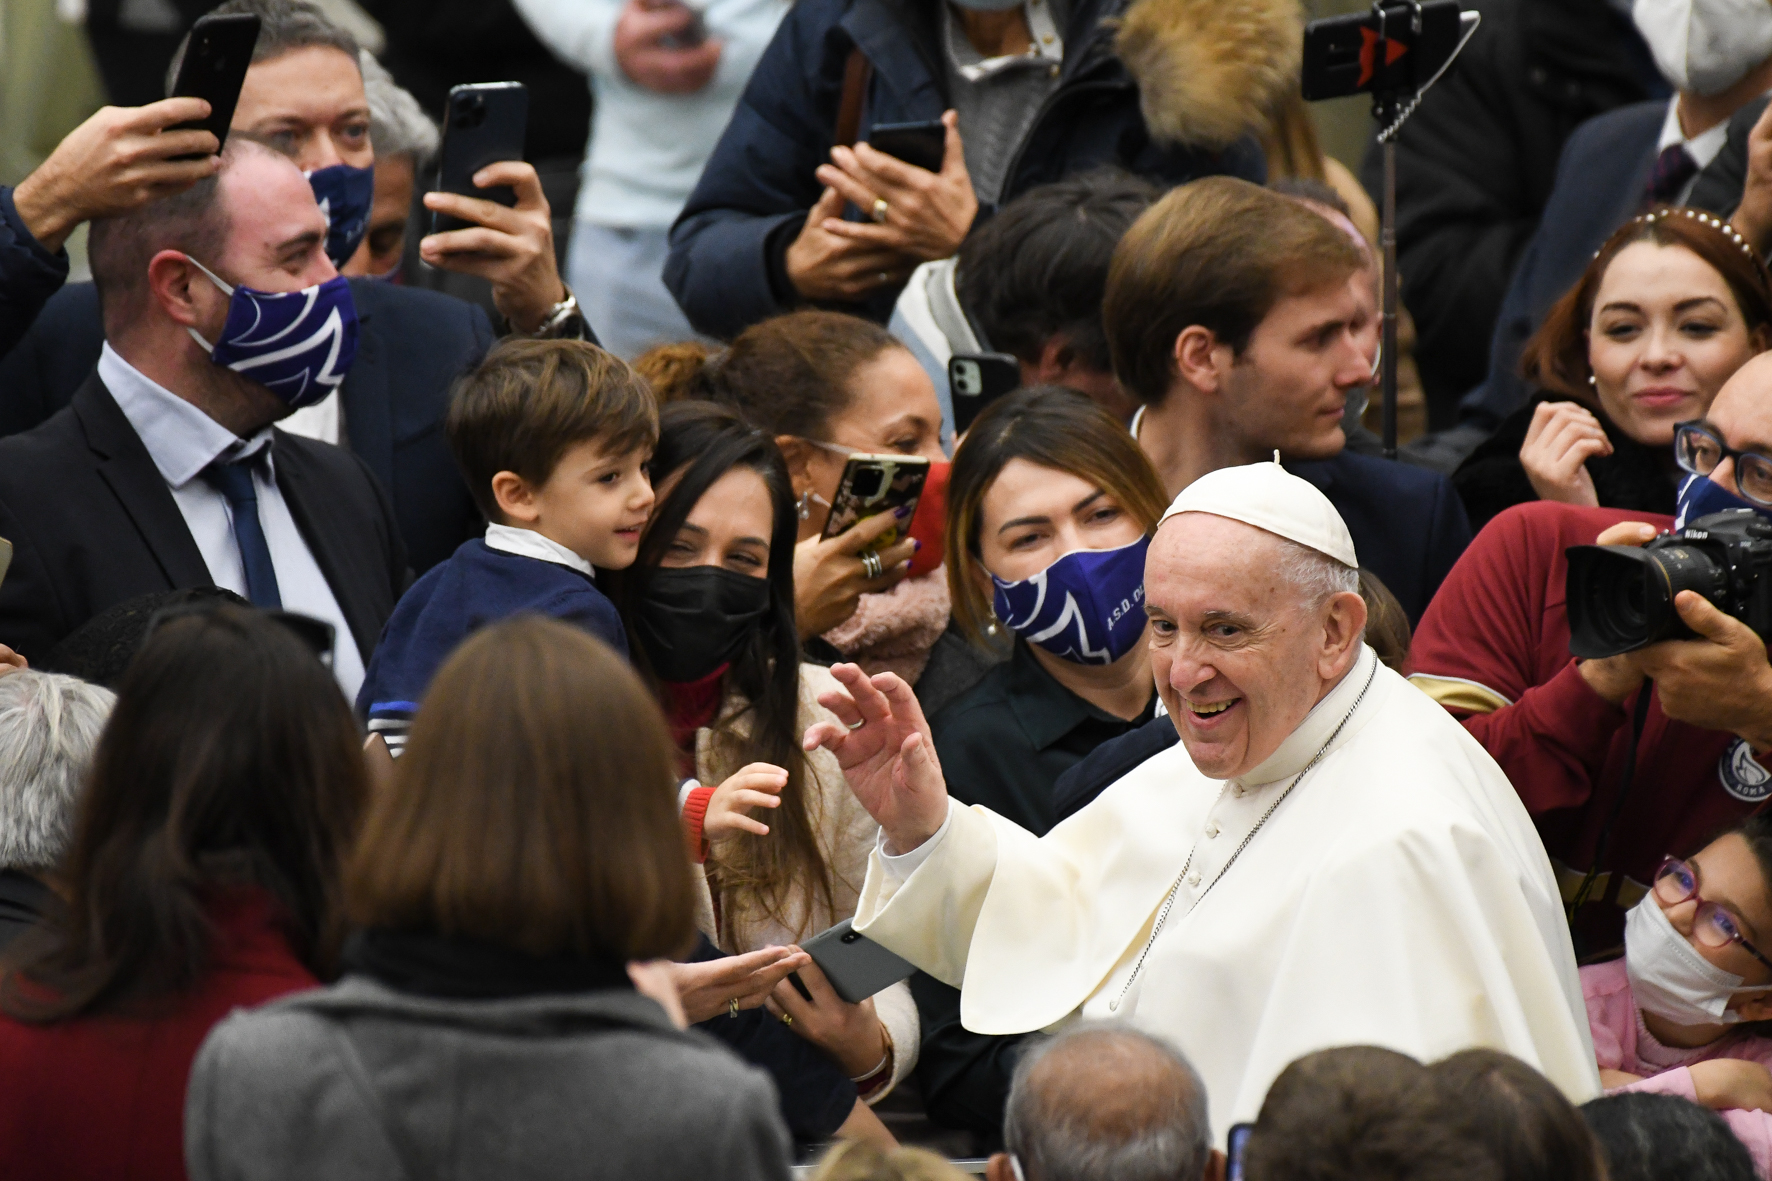 Vaticano, 1 dicembre 2021: udienza generale di Papa Francesco